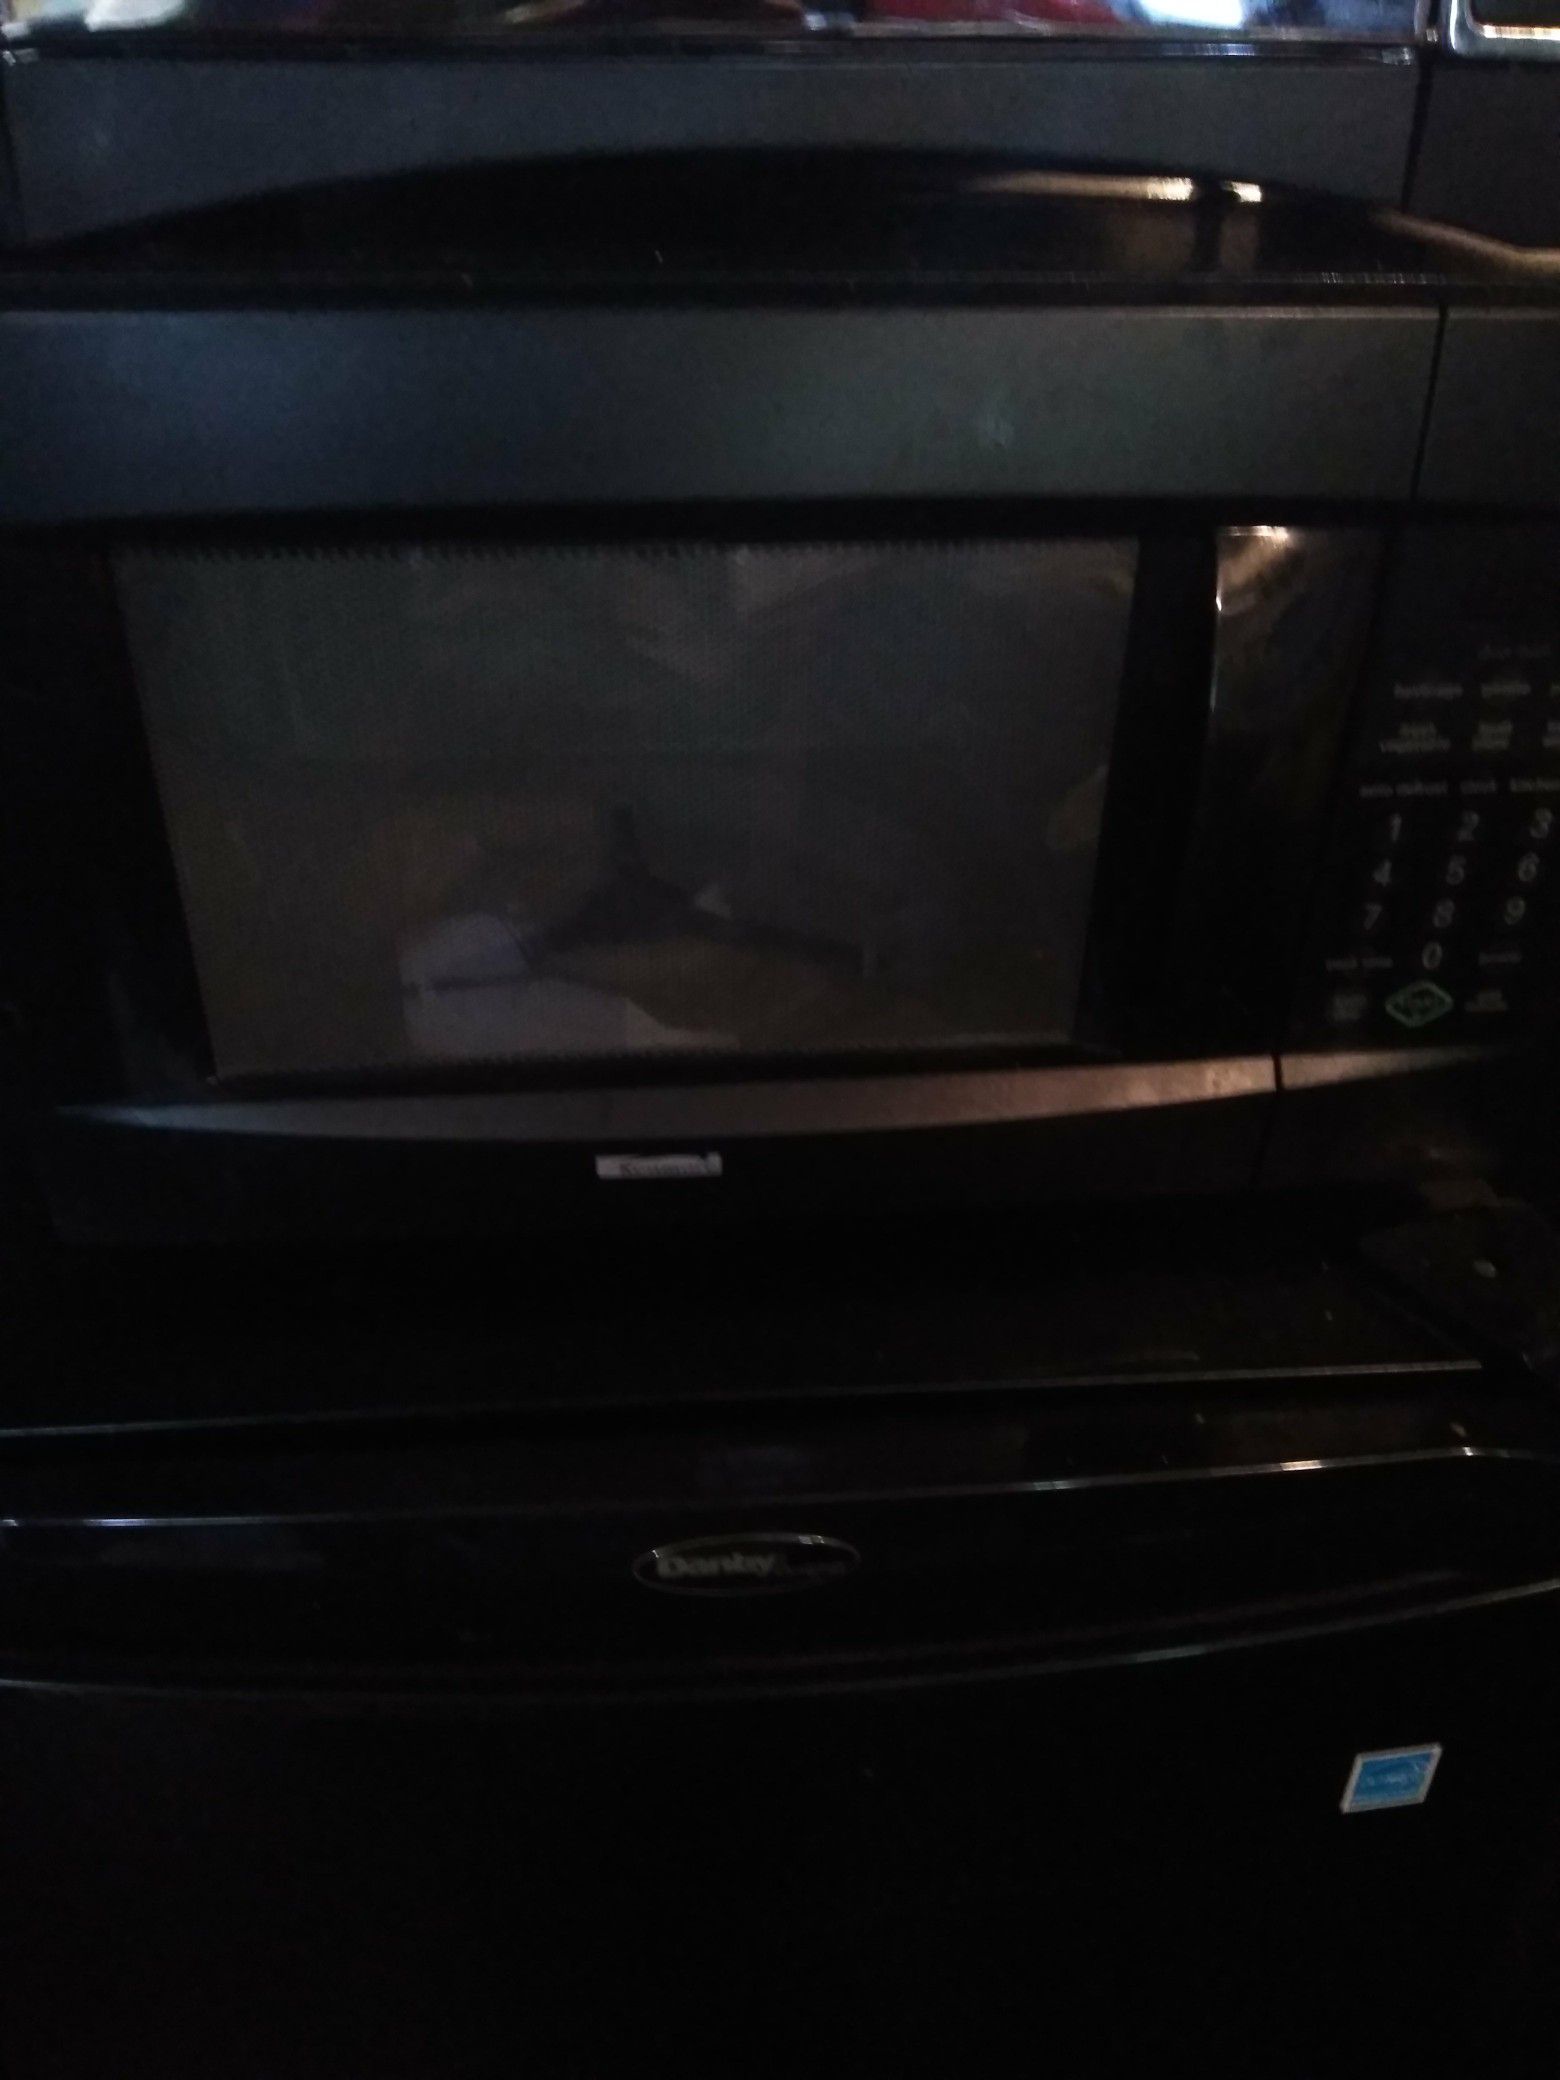 Black small Kenmore Digital microwave like new